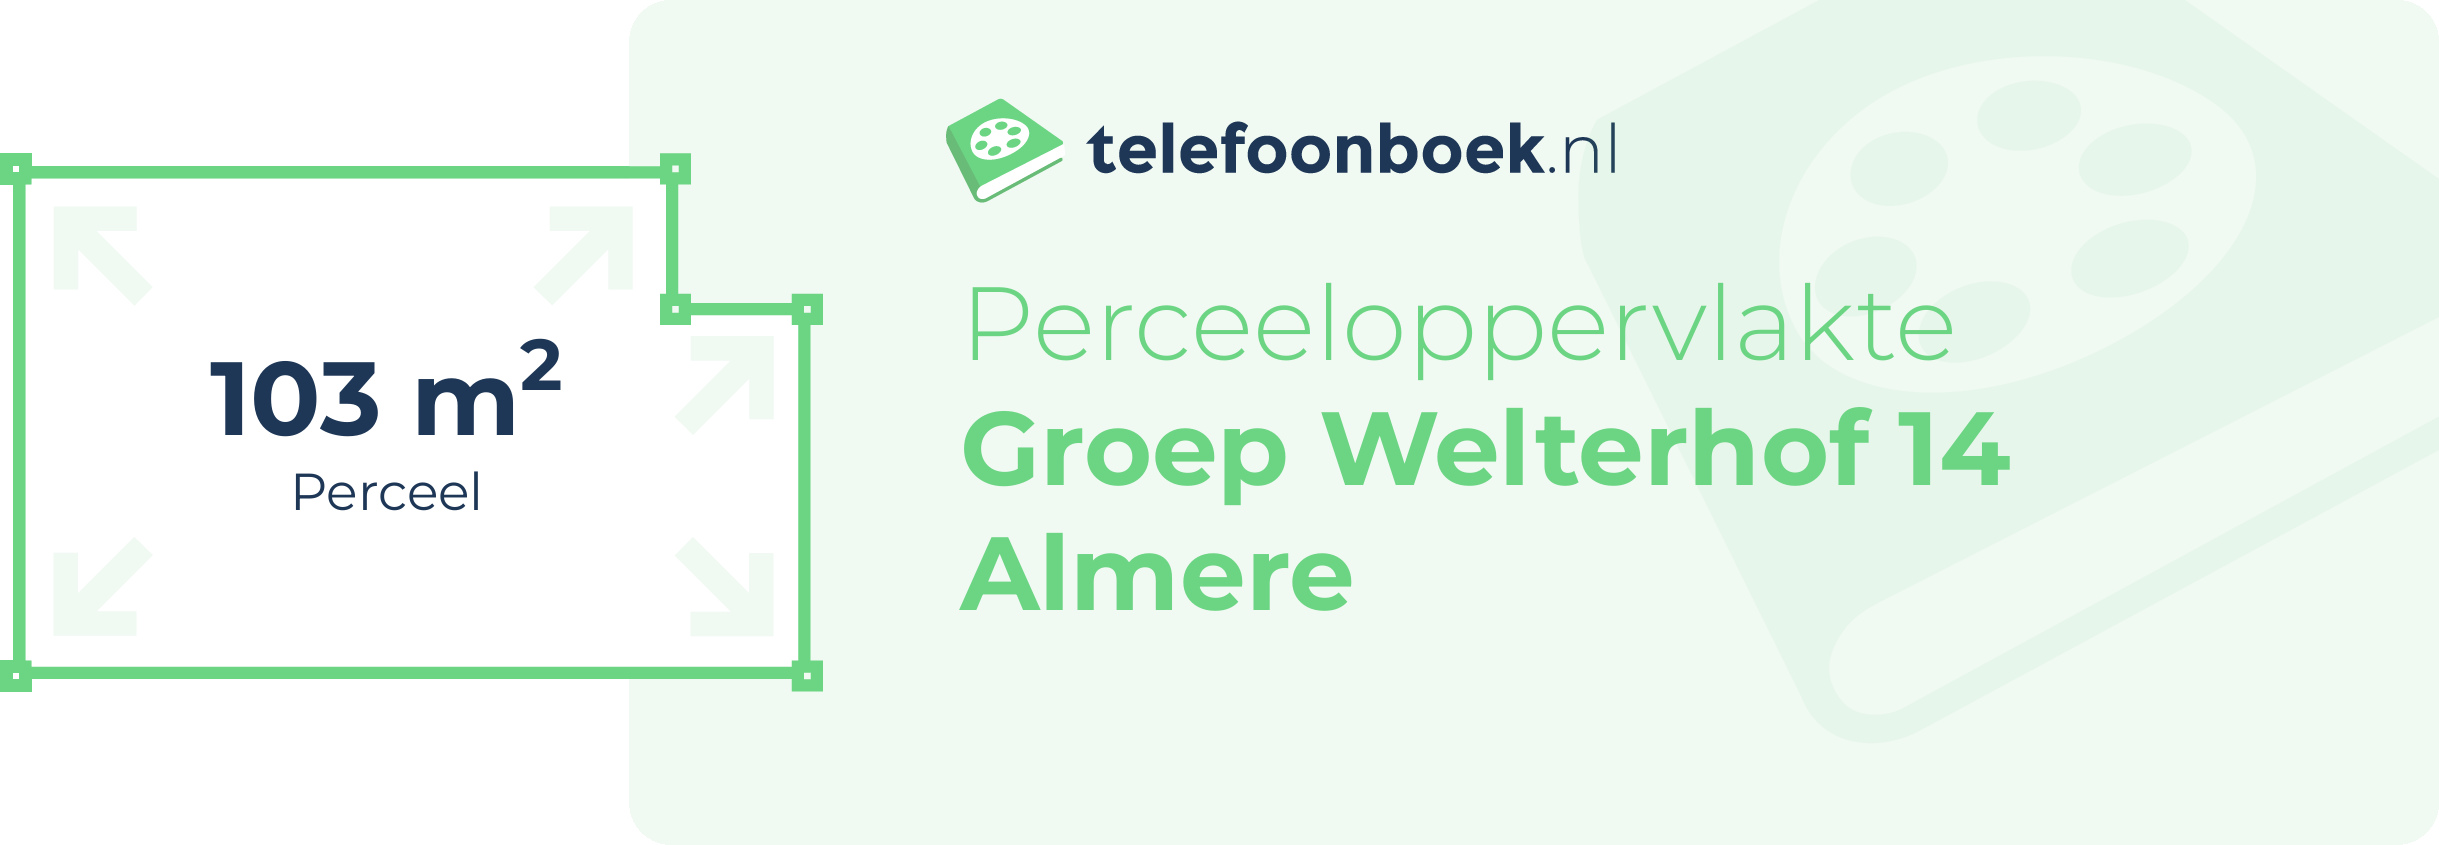 Perceeloppervlakte Groep Welterhof 14 Almere